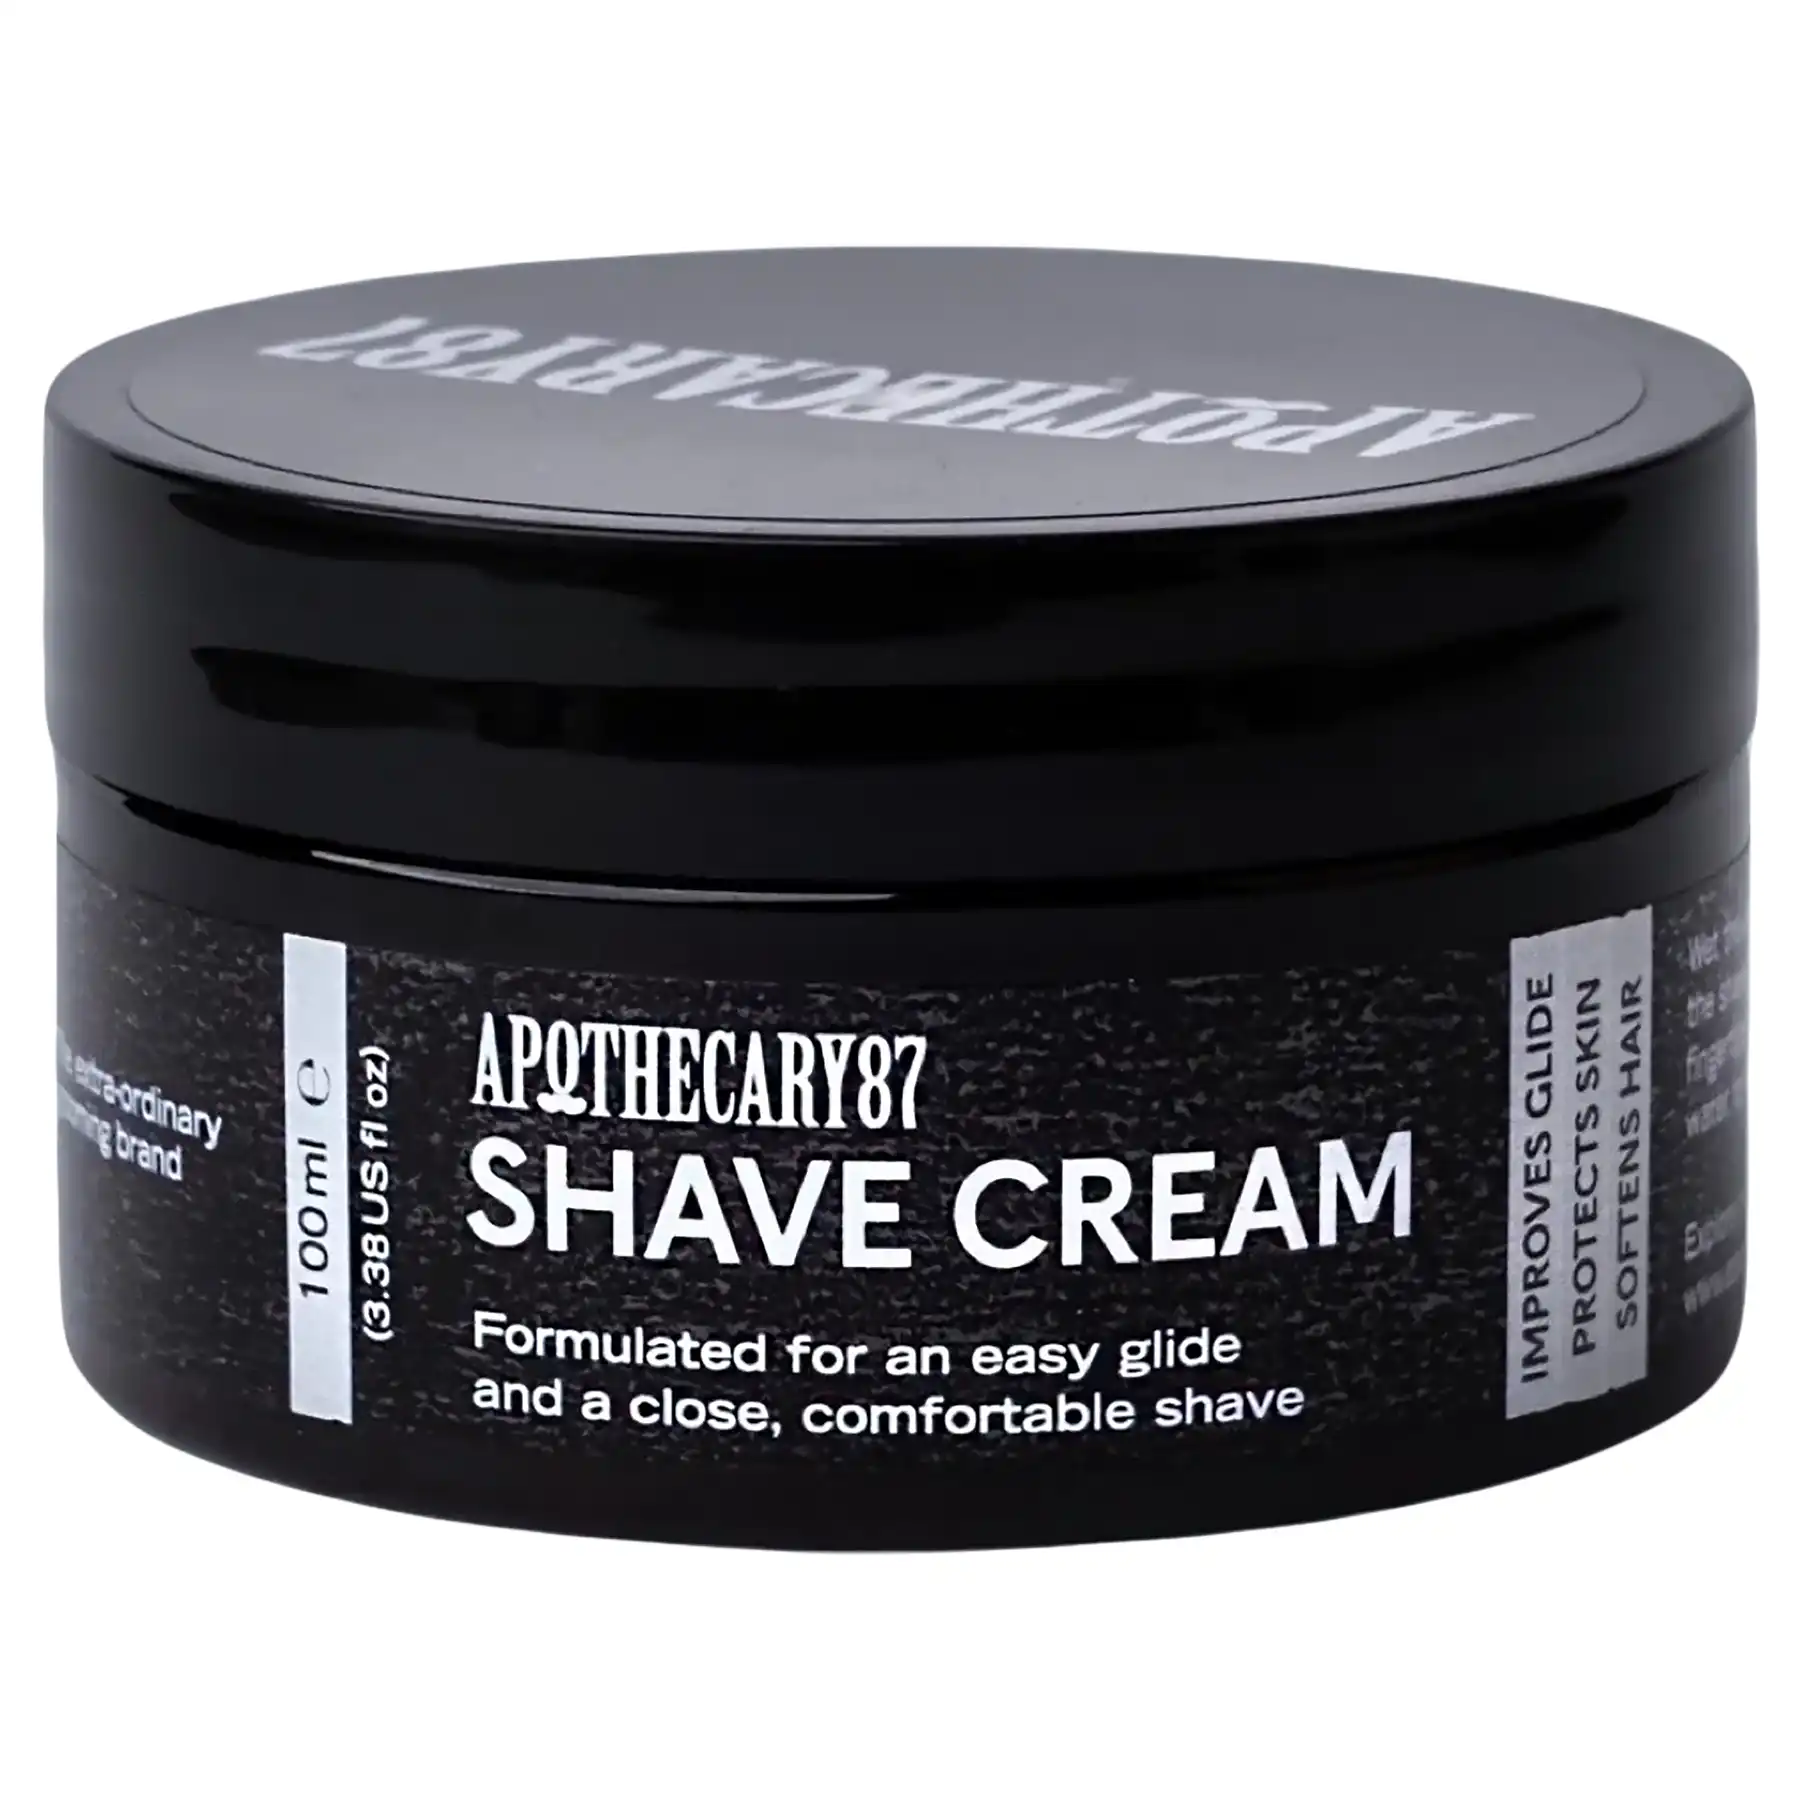 Apothecary 87 Shave Cream